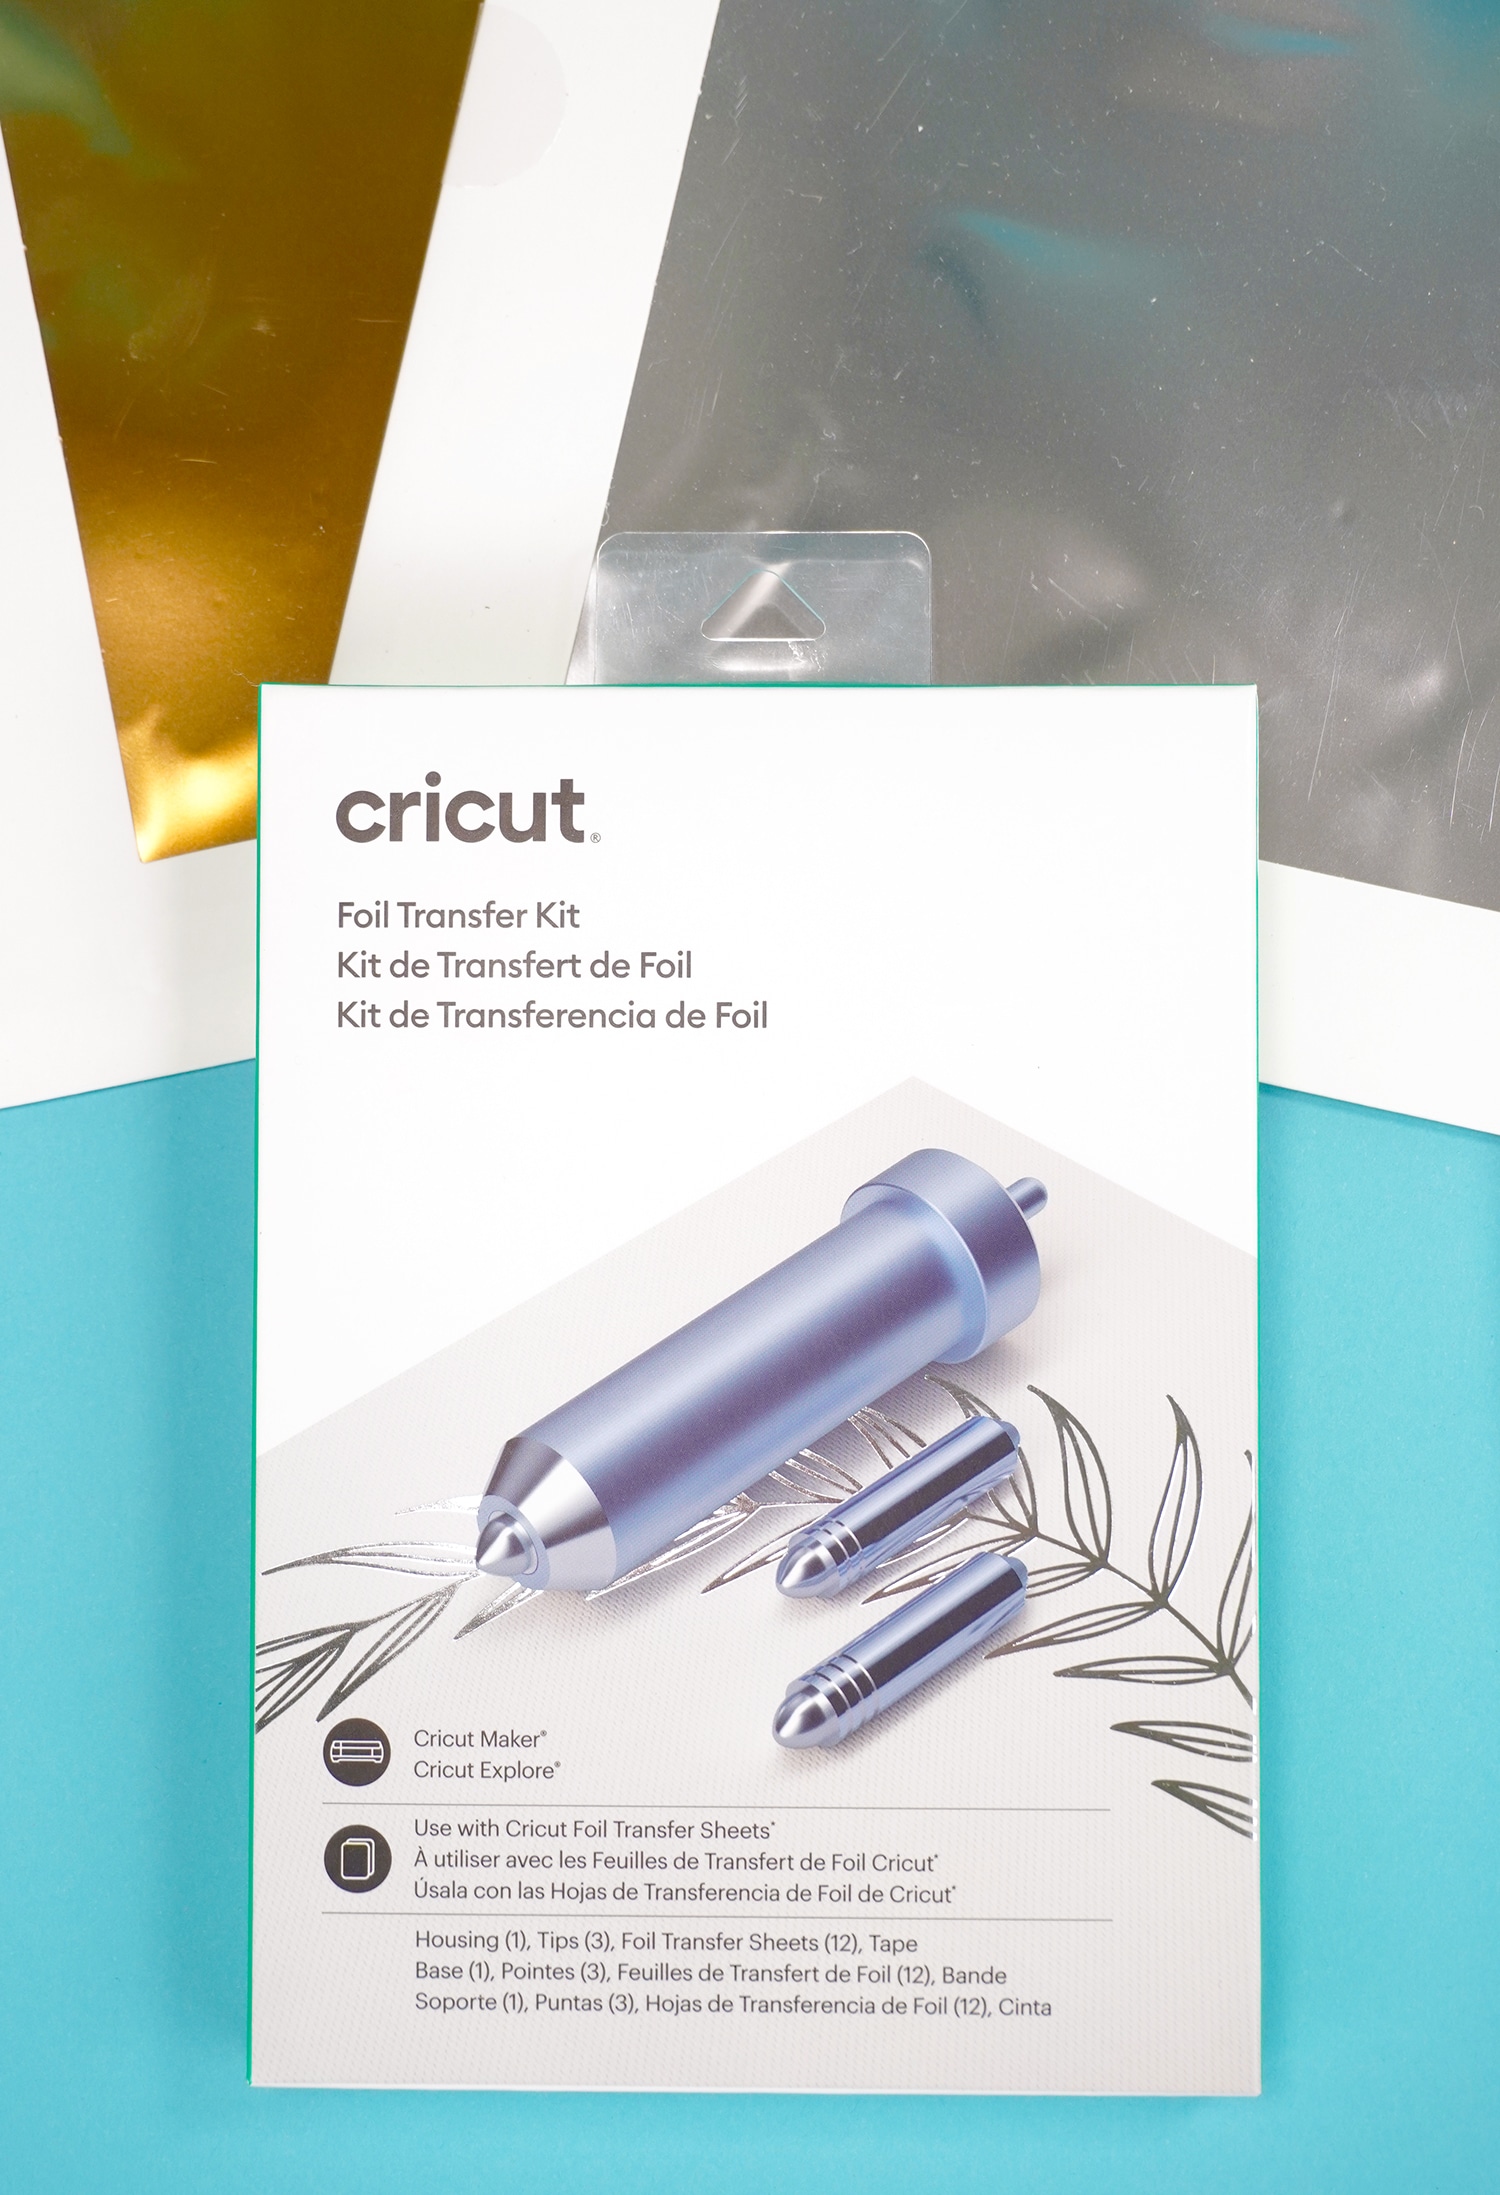 How to use the cricut foil transfer kit. #cricut #cricutfoiltransfer , Foil Transfer